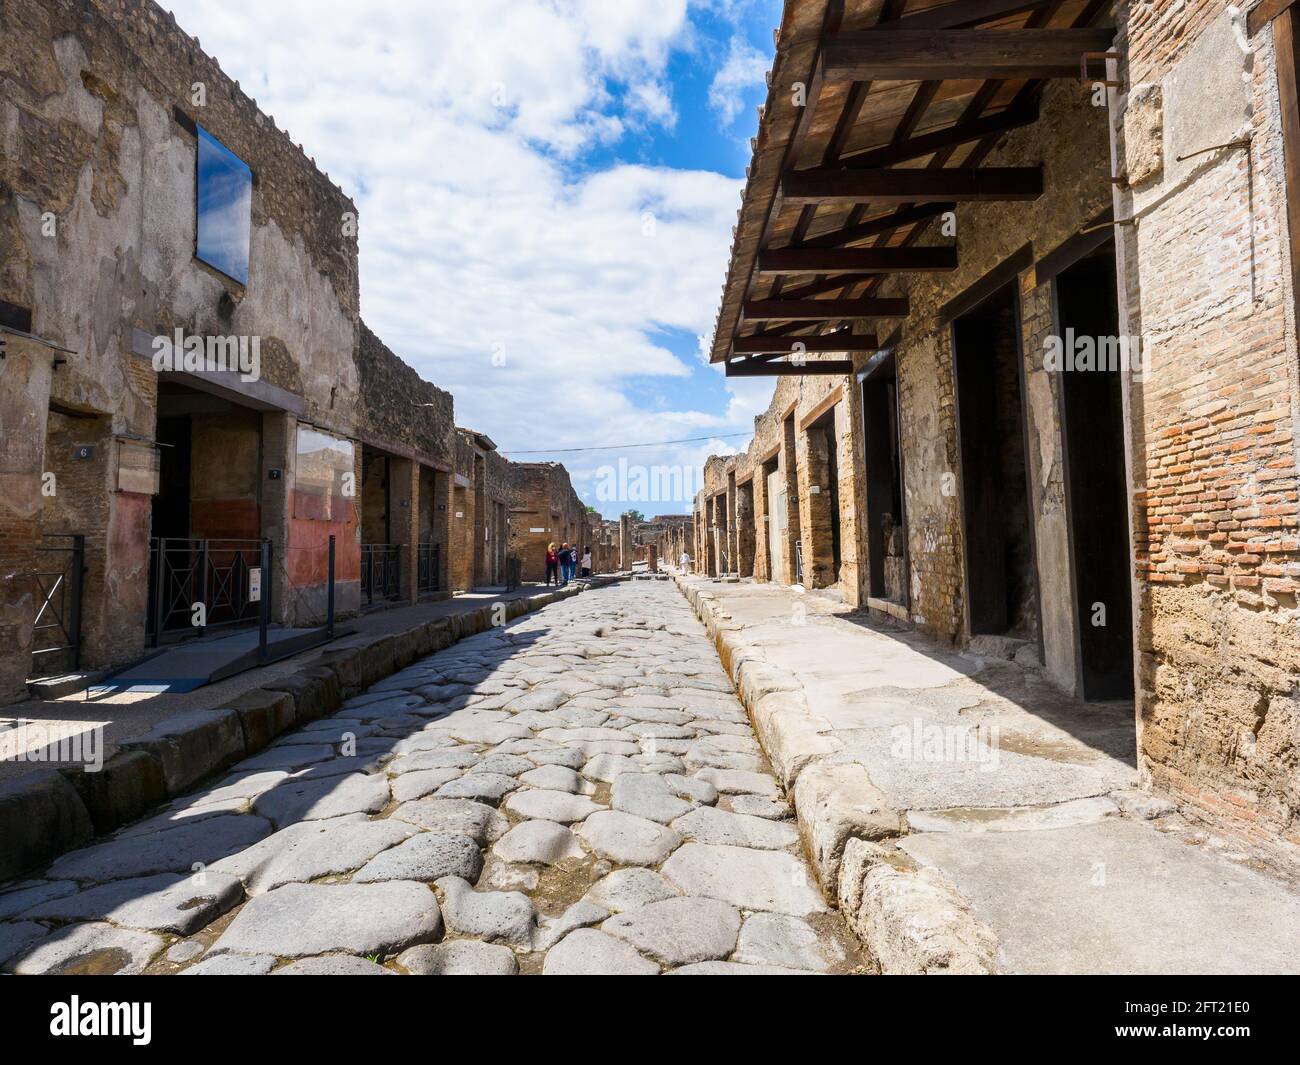 Viale dell'Abbondanza - Pompeii archaeological site, Italy Stock Photo